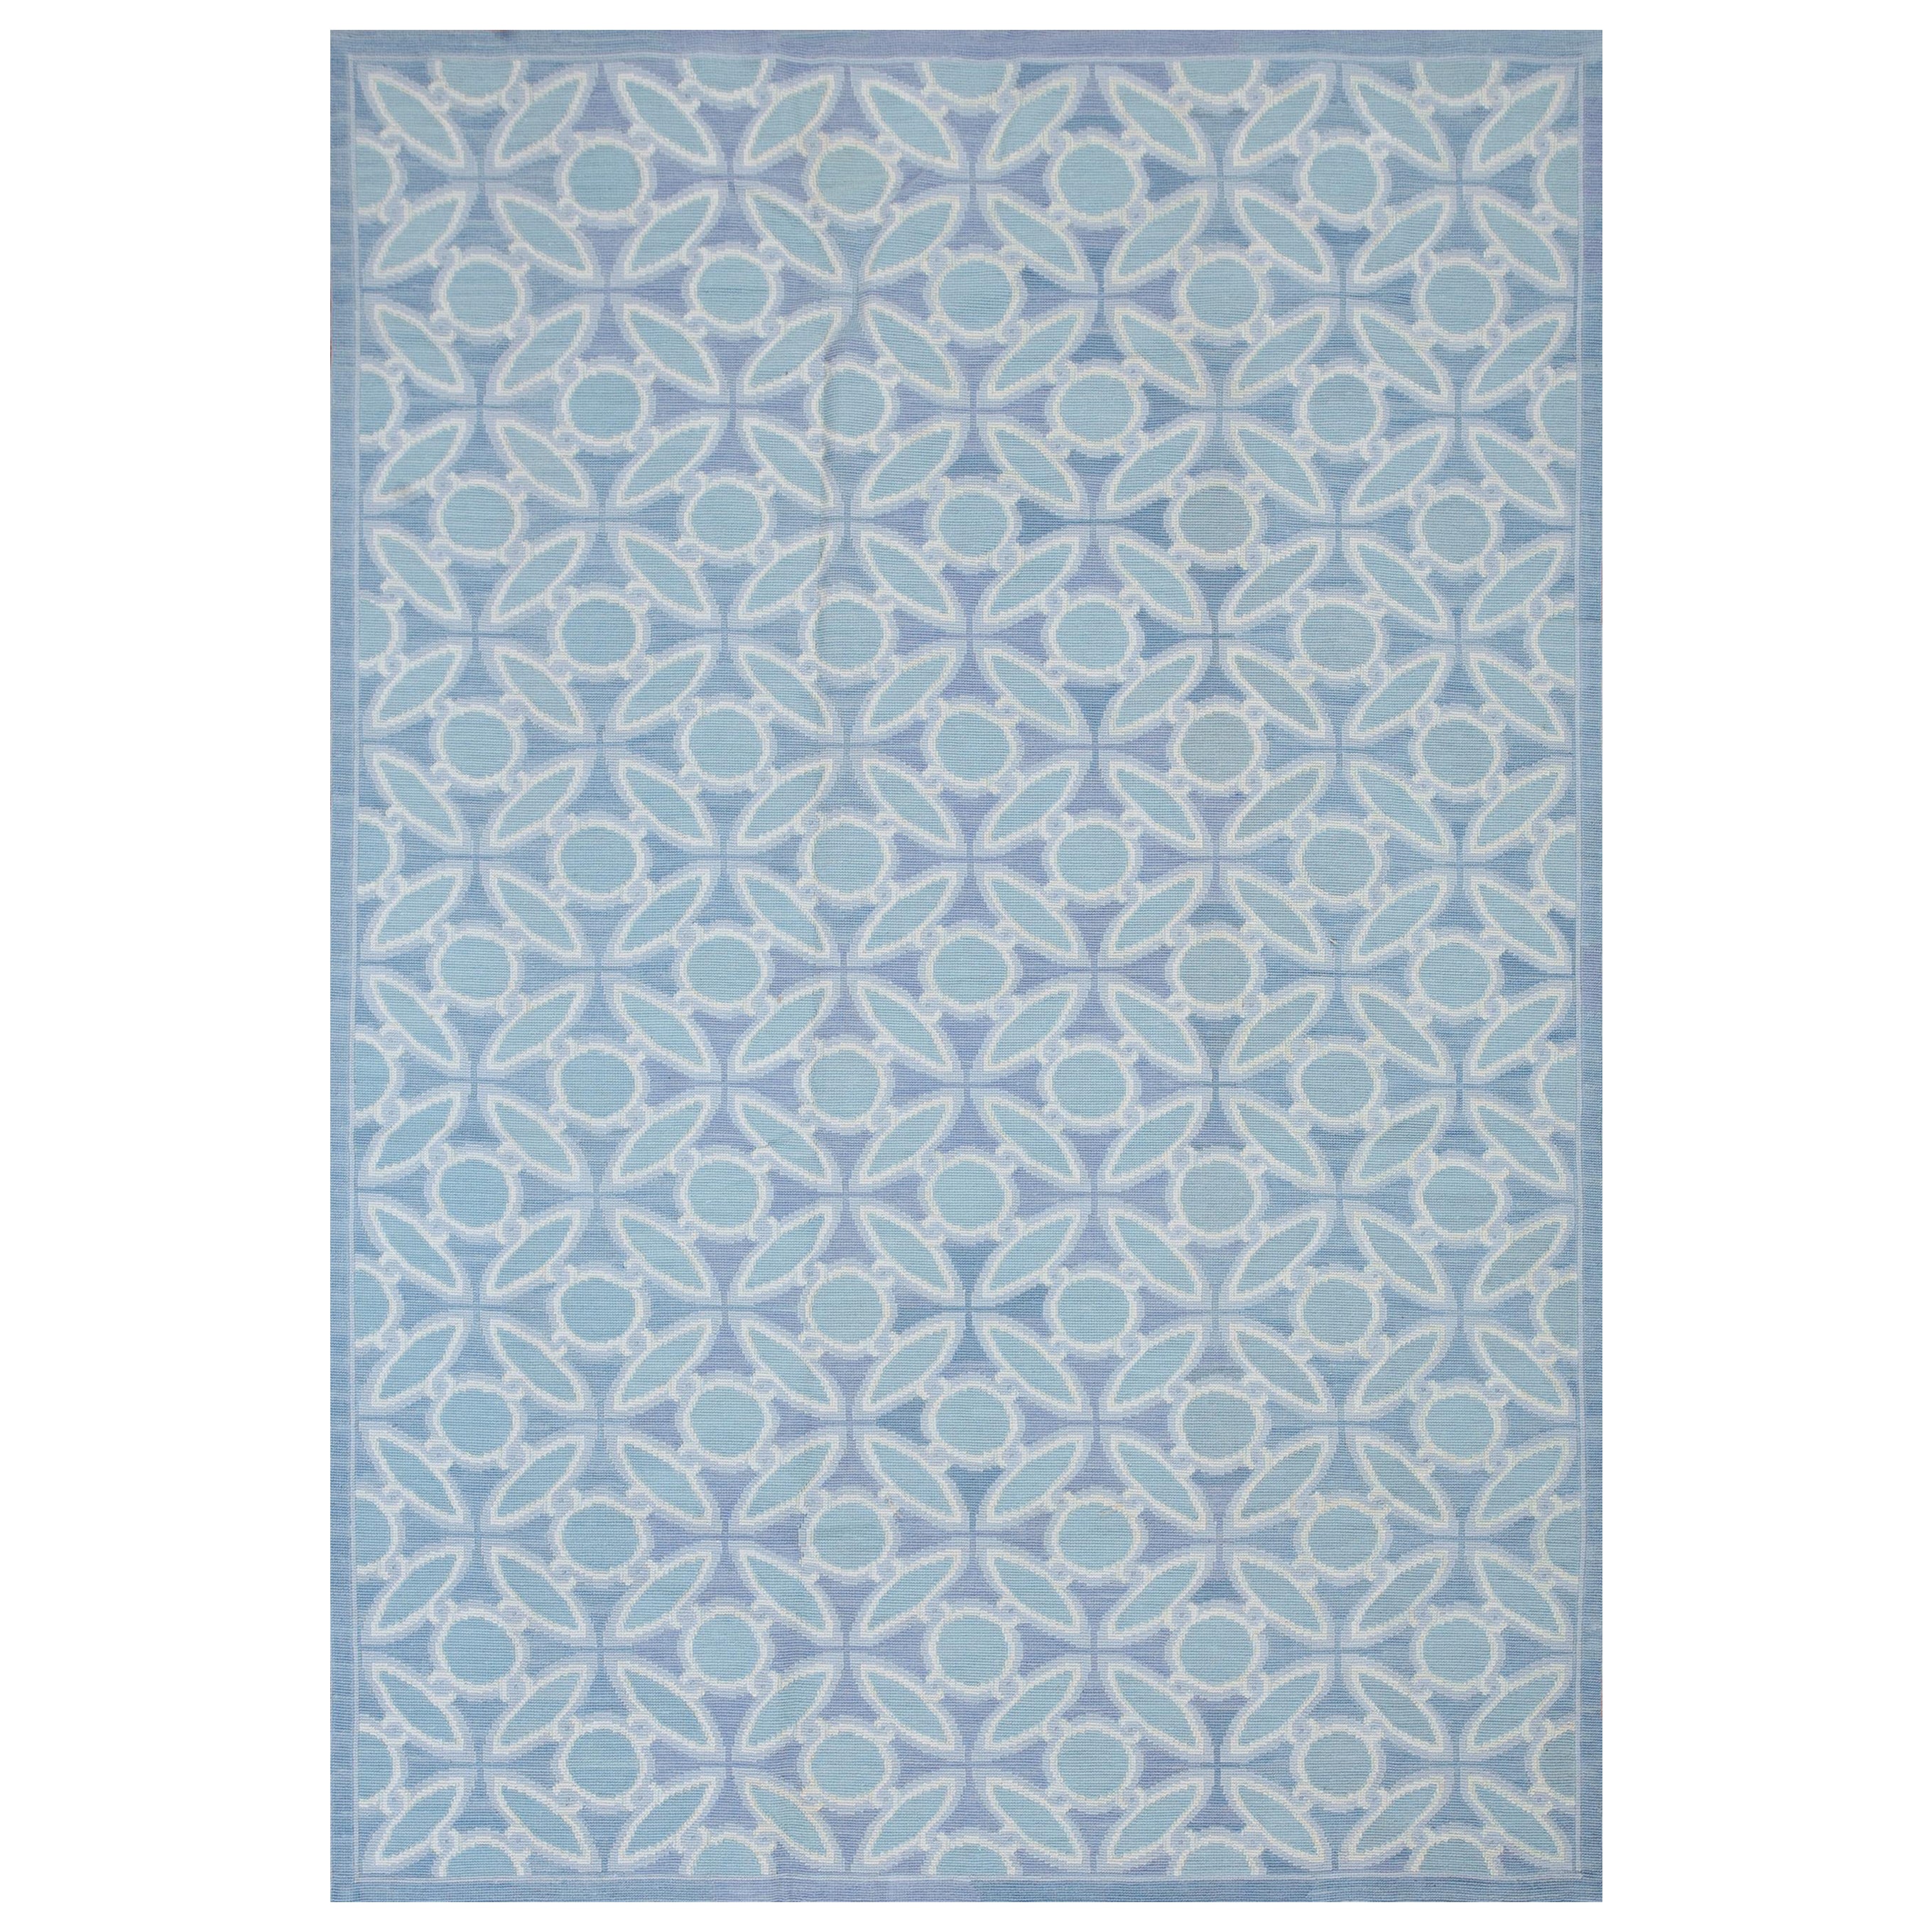 Contemporary Handwoven Needlepoint Flat Weave Carpet  (6' x 9' - 183 x 274 cm)